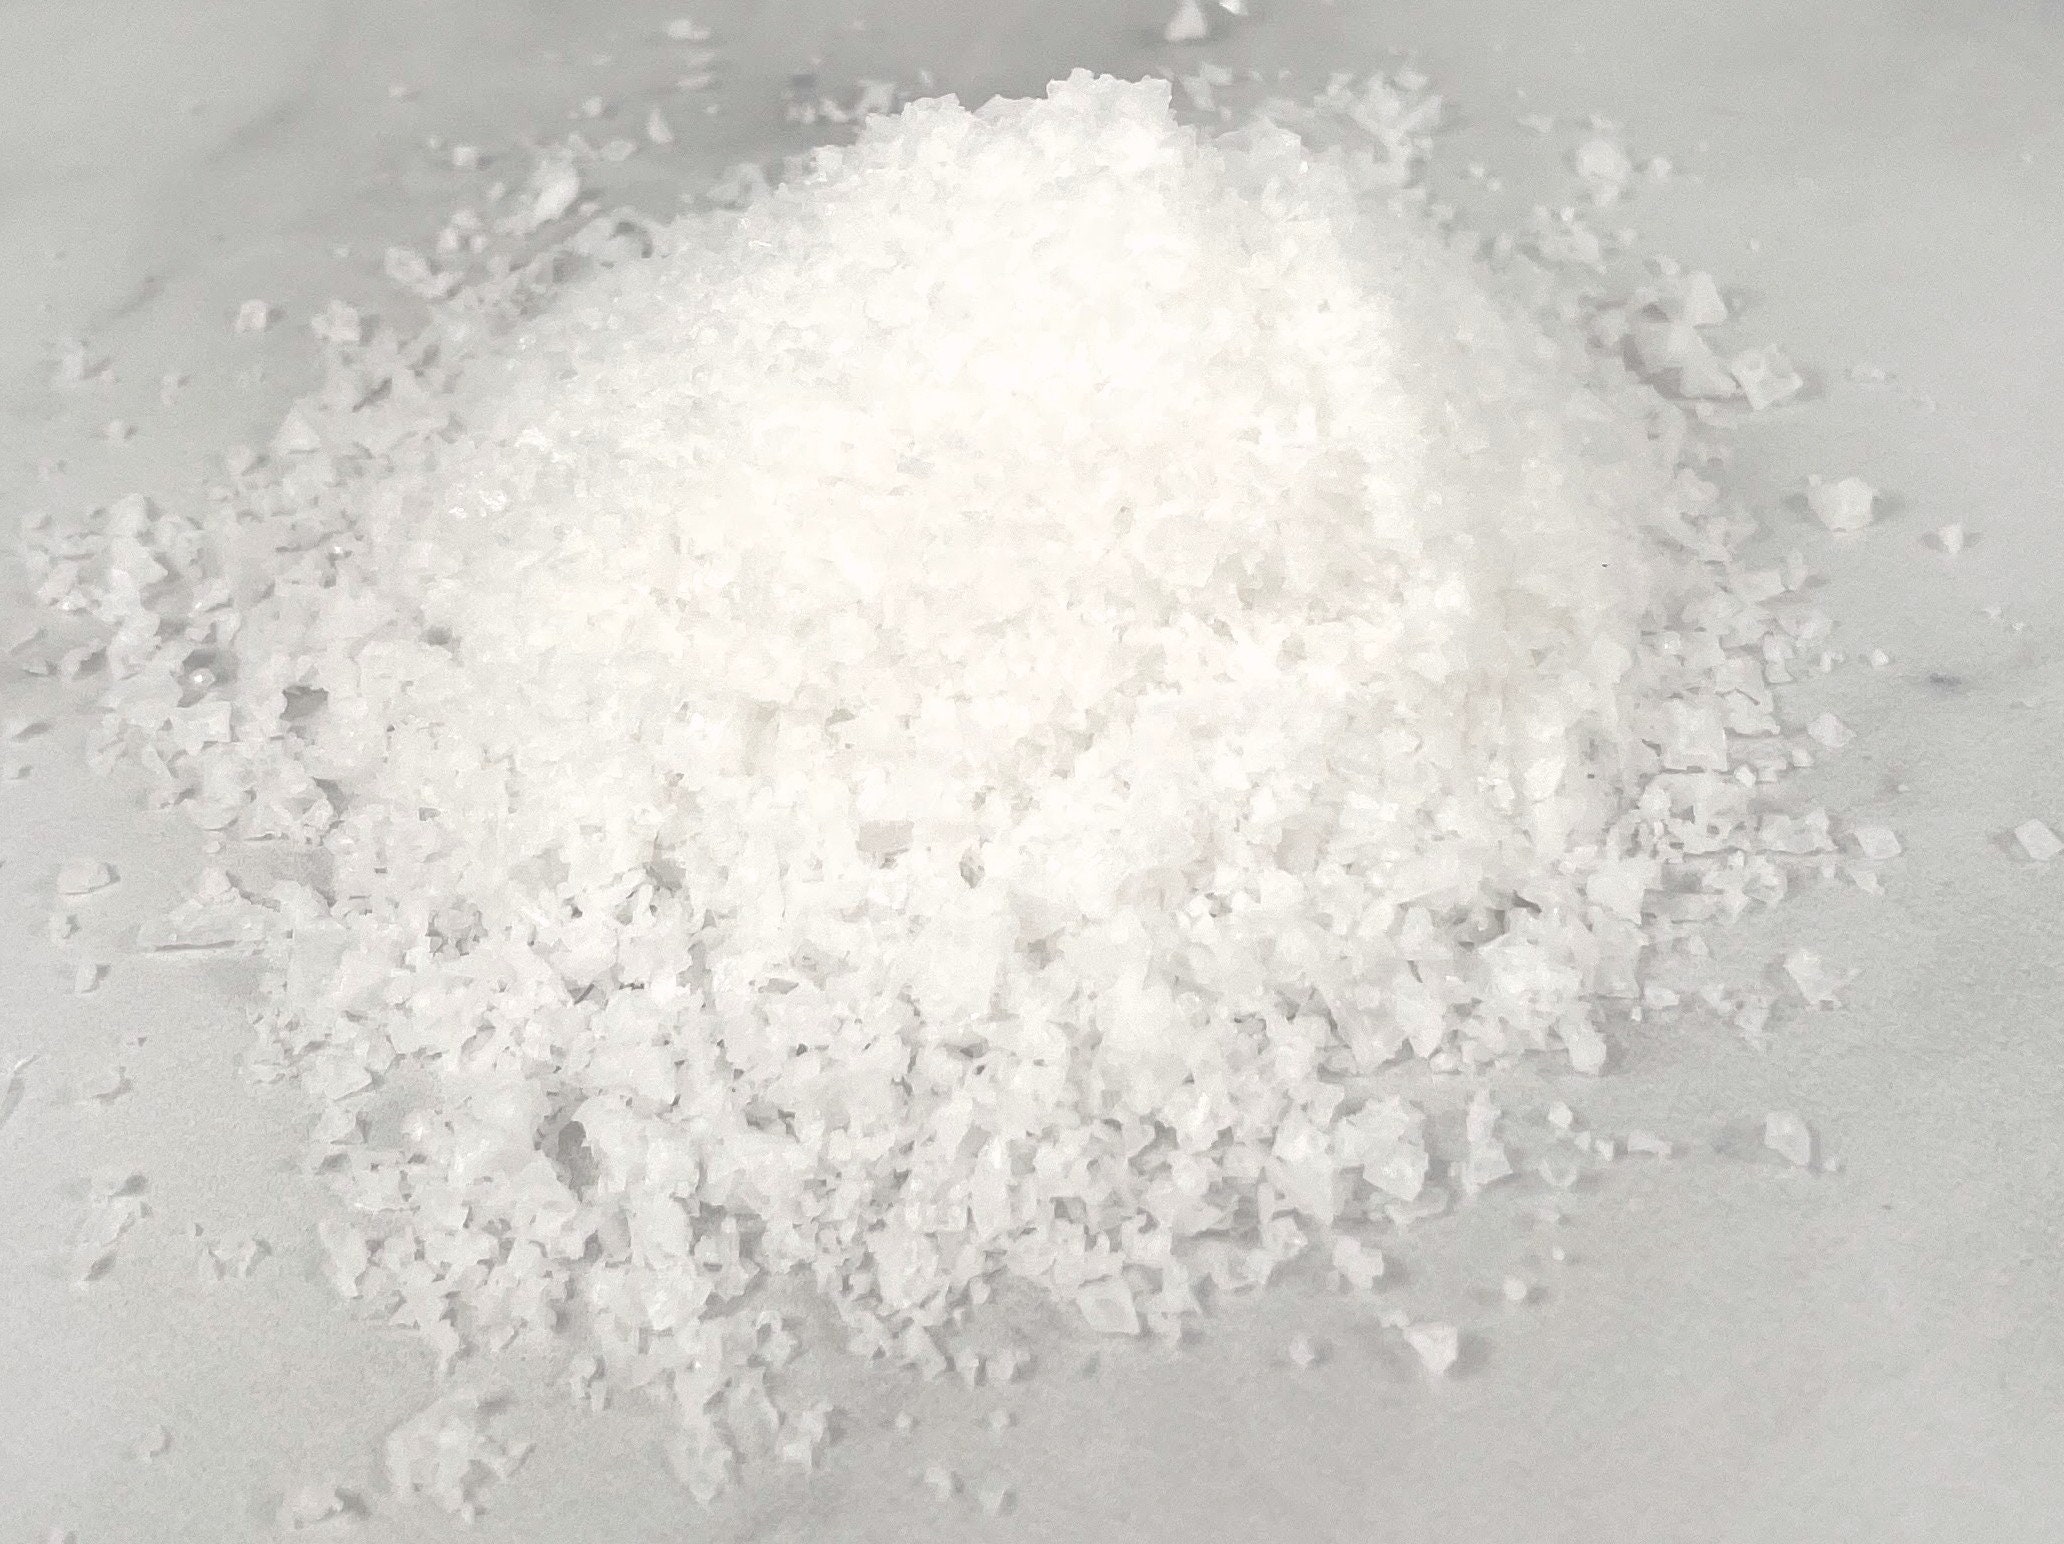 Sea Salt FLAKES, Maldon 1lb, Sal Marina 100% Natural Granules